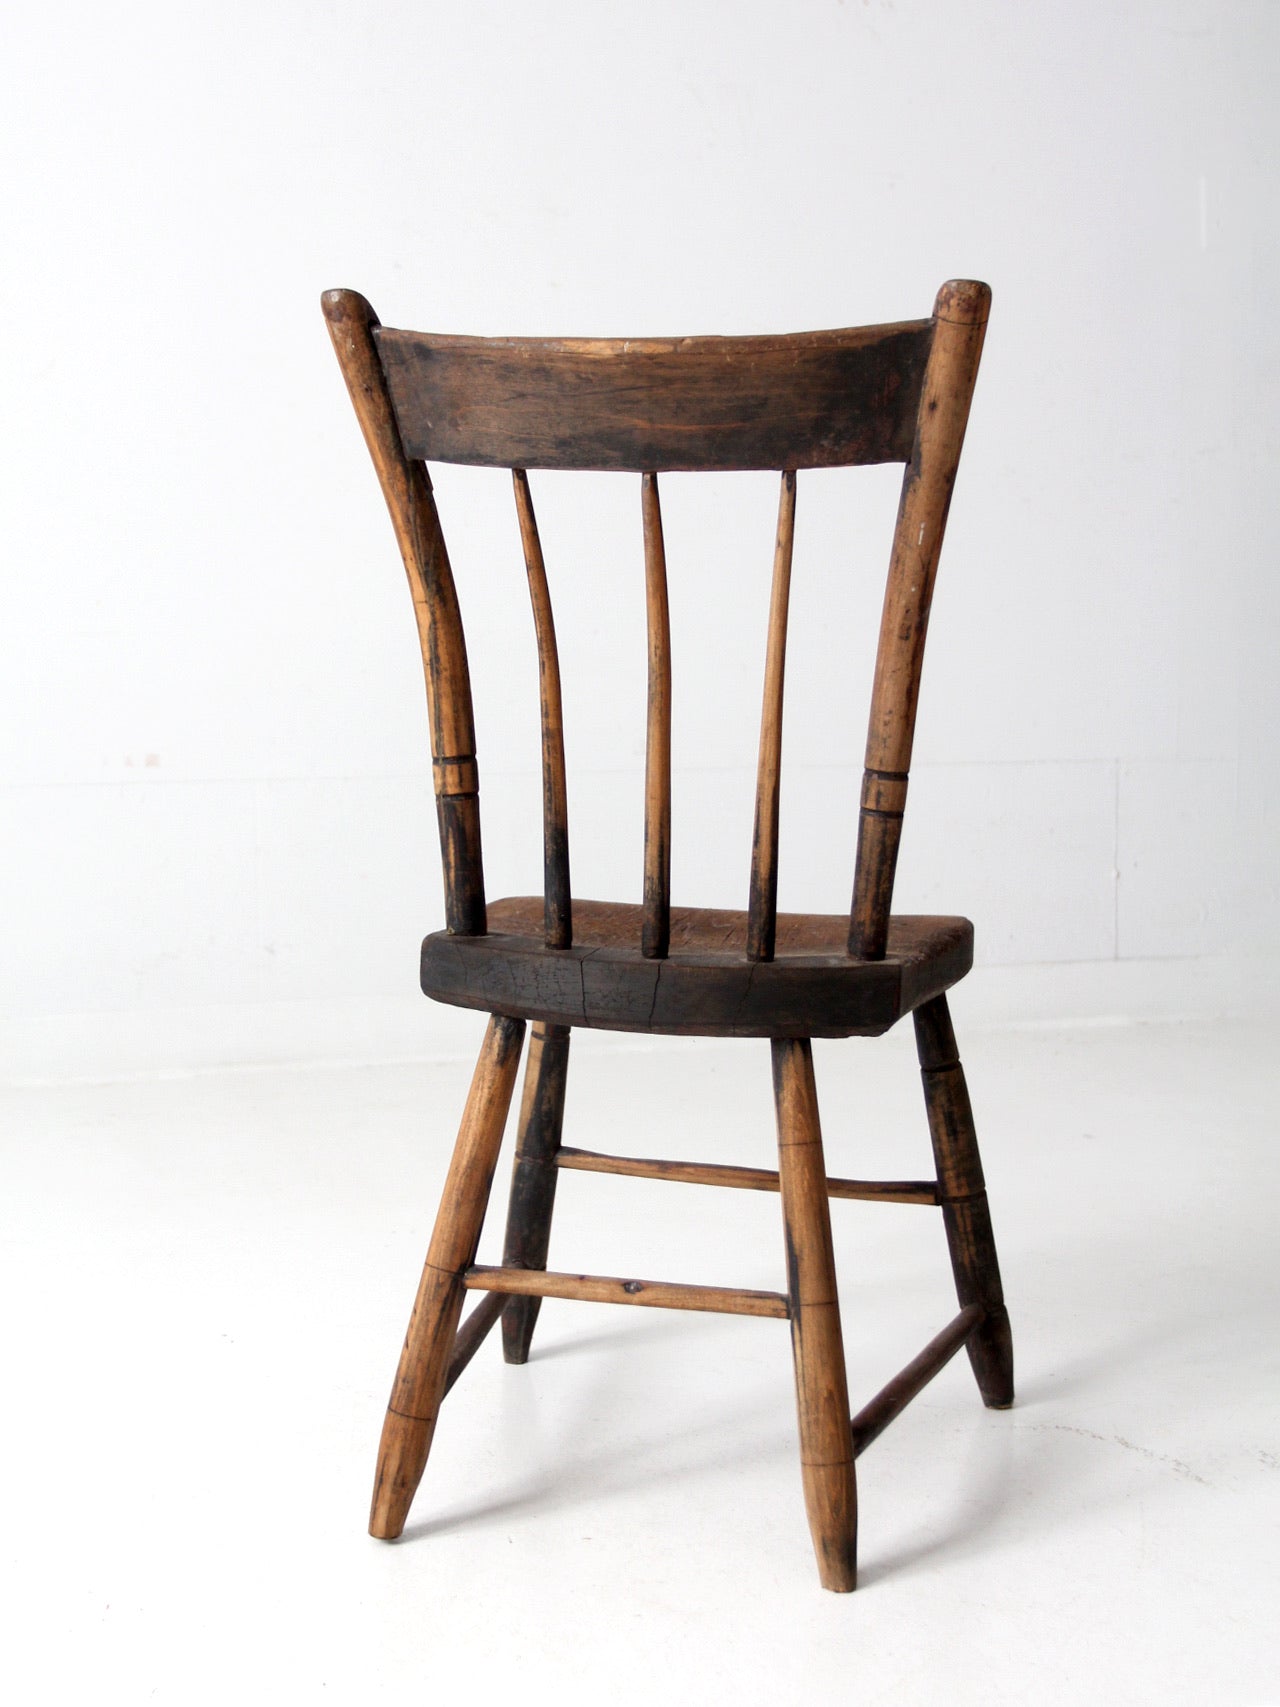 antique plank seat farmhouse chair